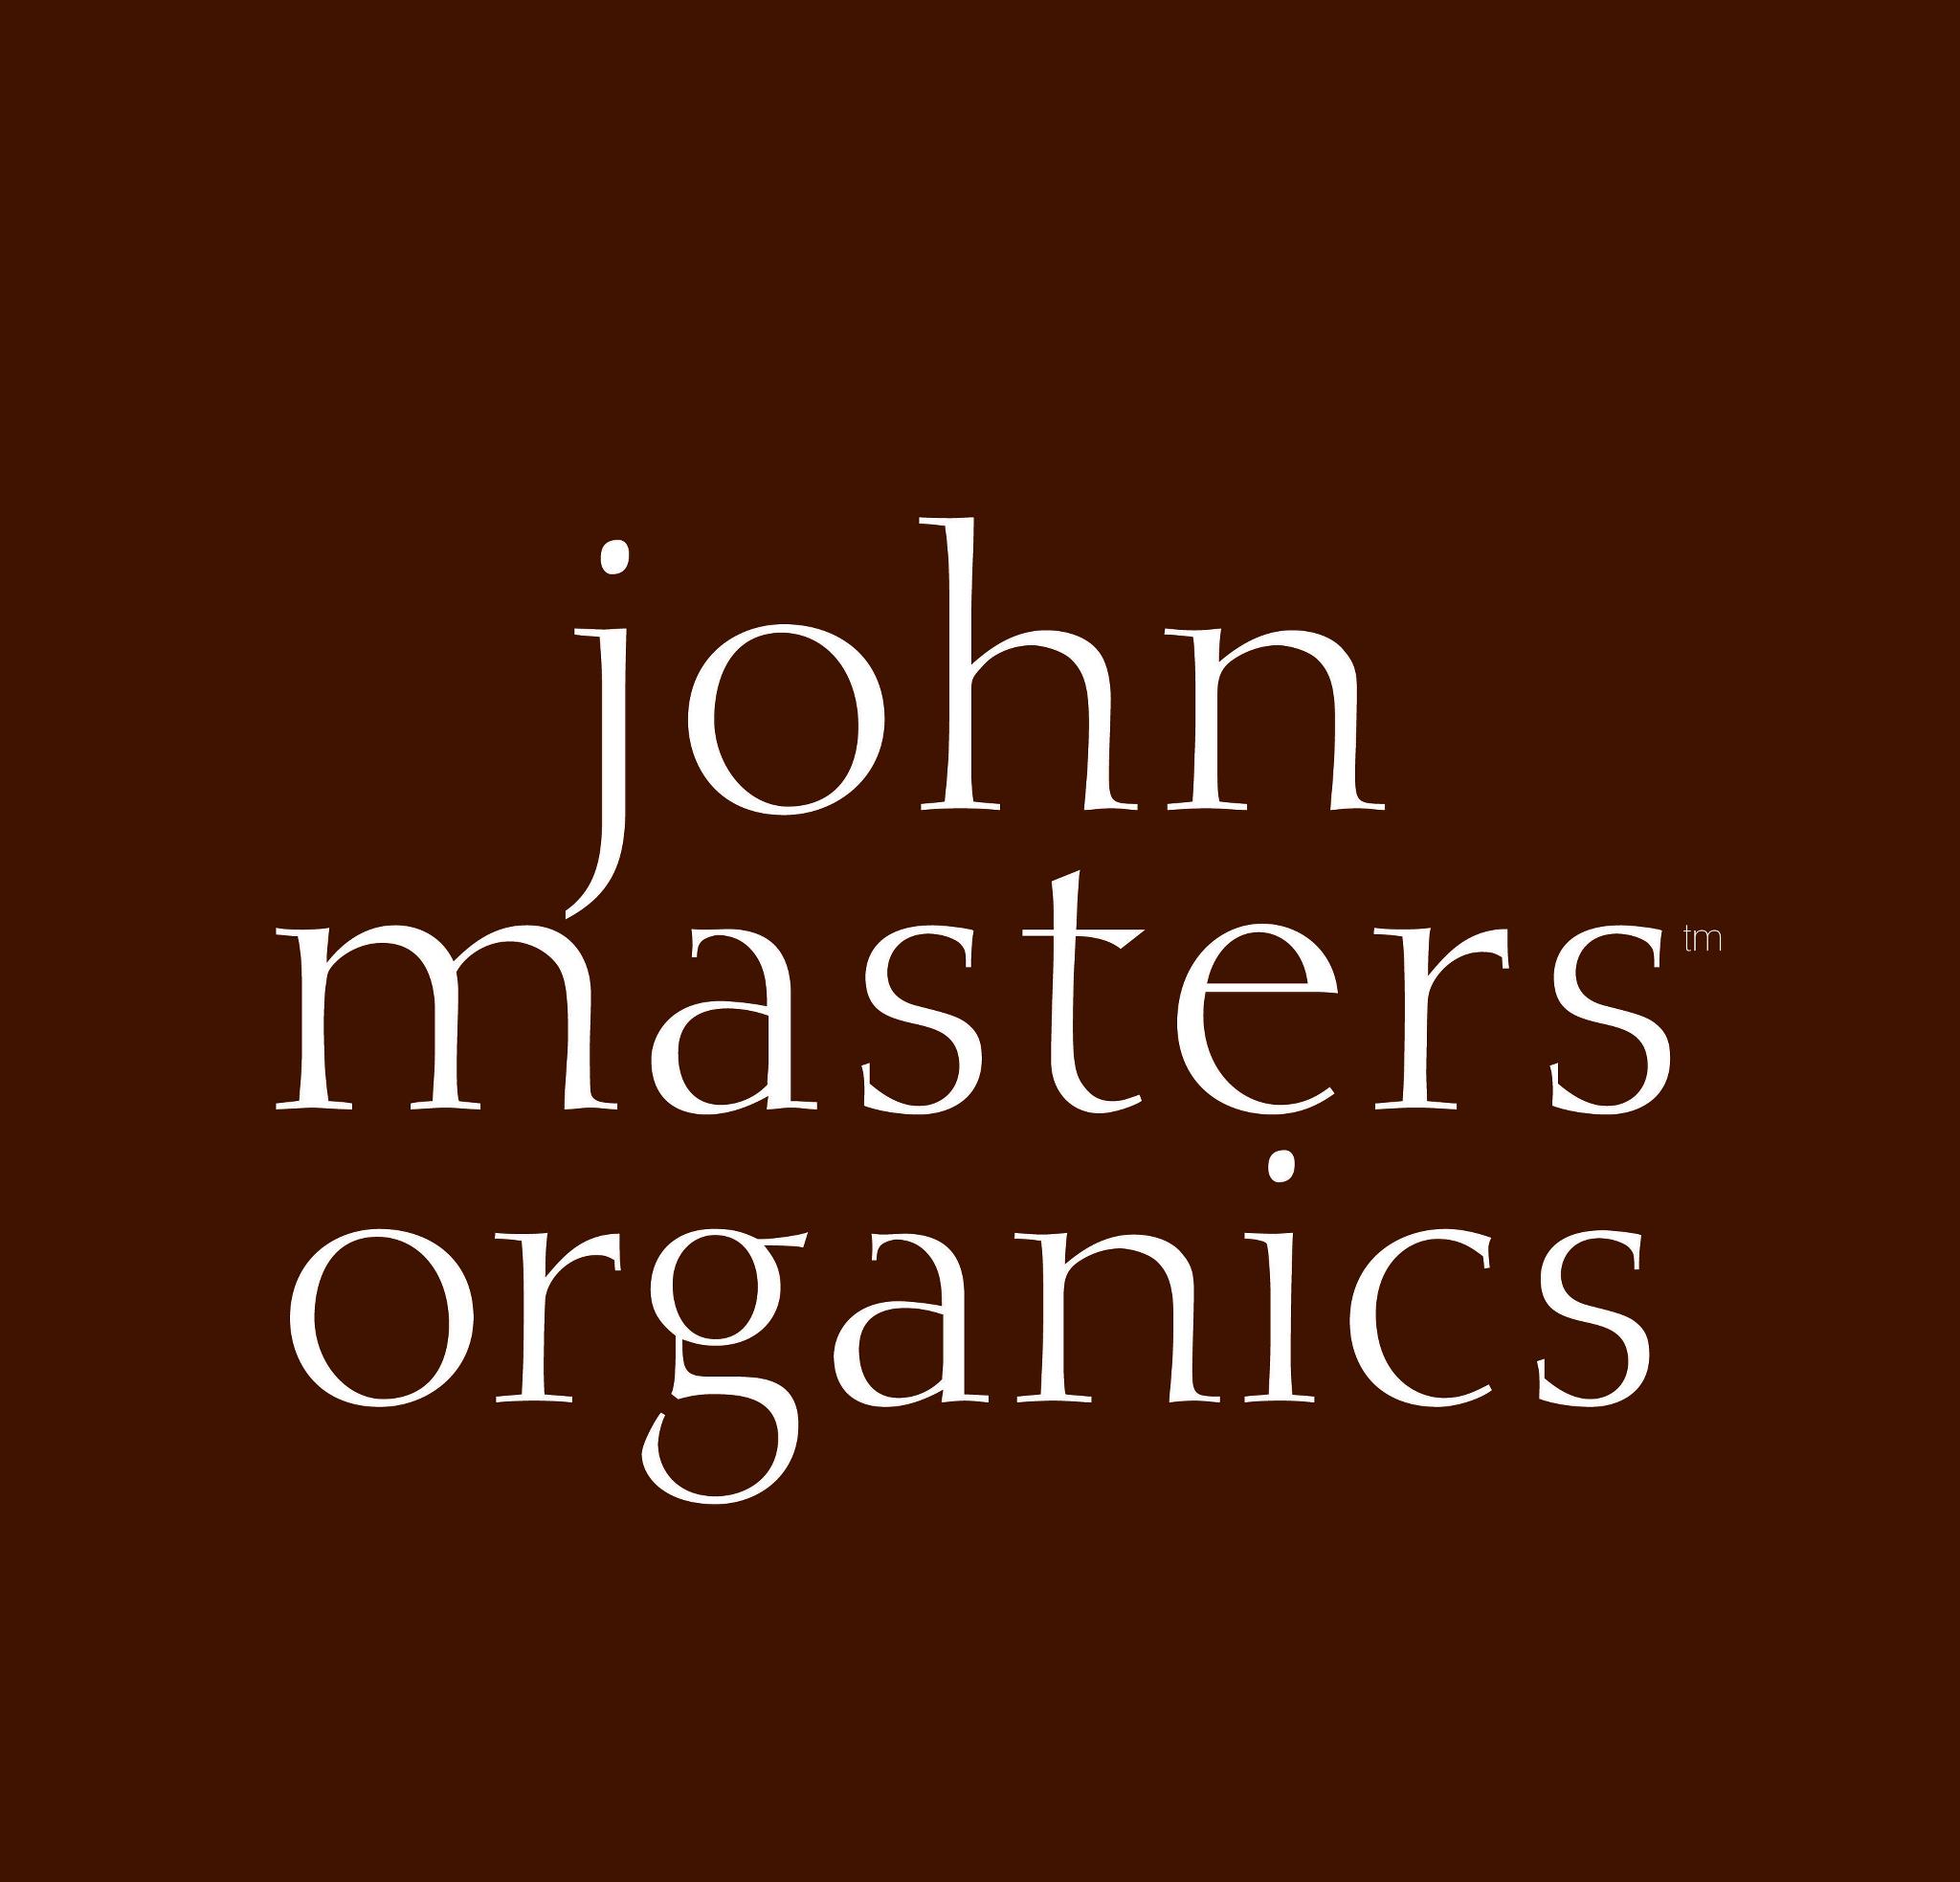 John Masters Organics on blendnewyork